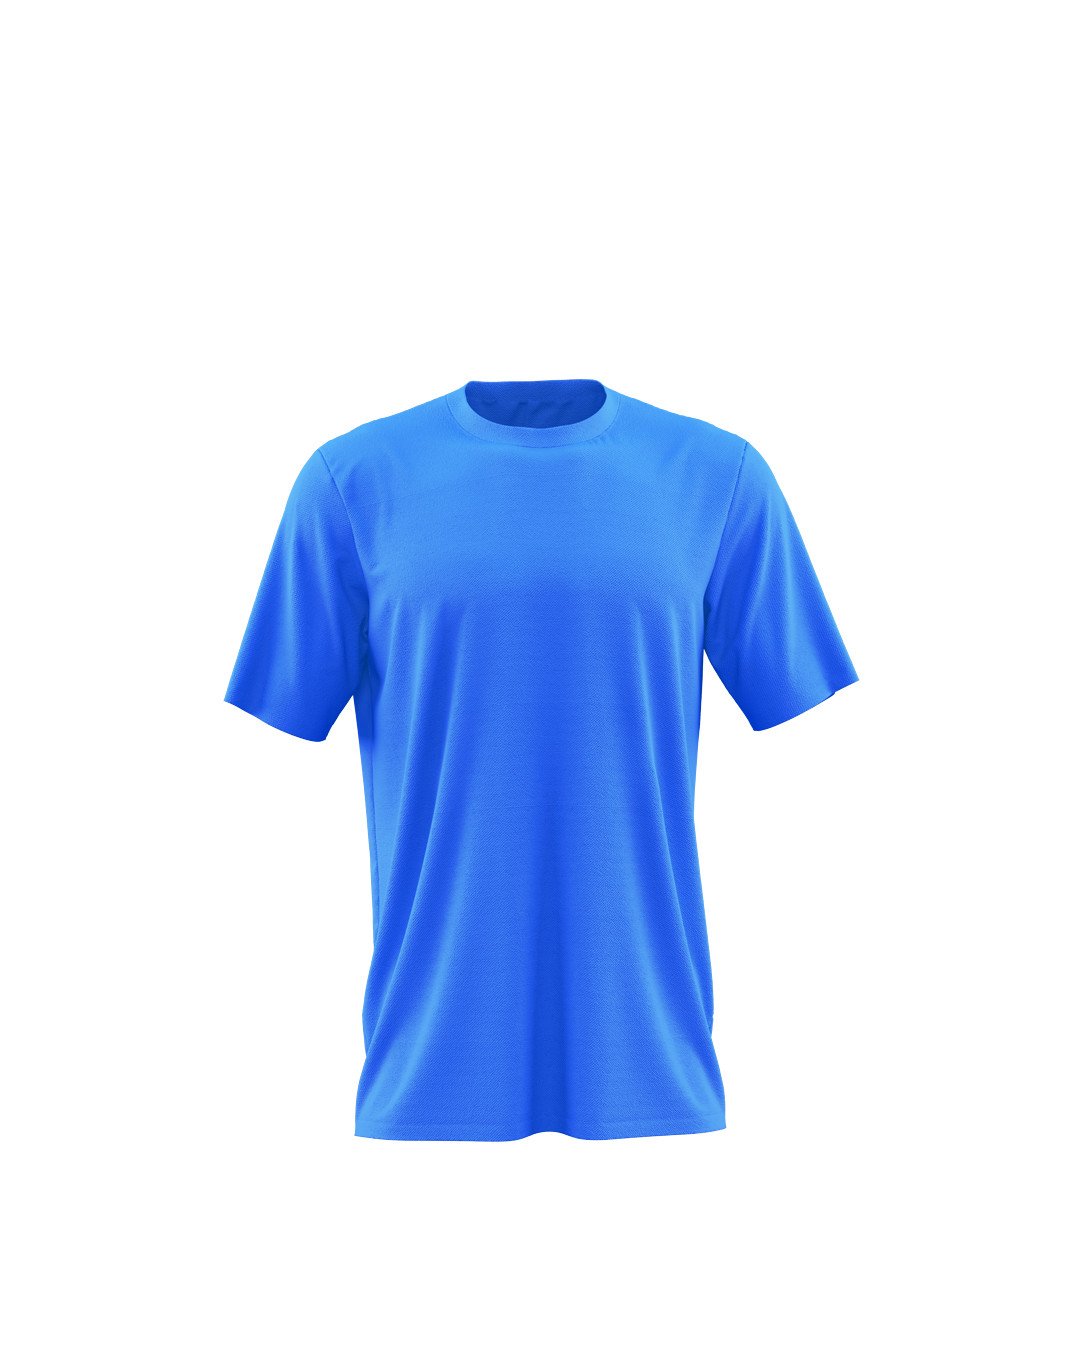 Plain Round Neck Bio-washed Super Combed Sky Blue Cotton T-Shirt